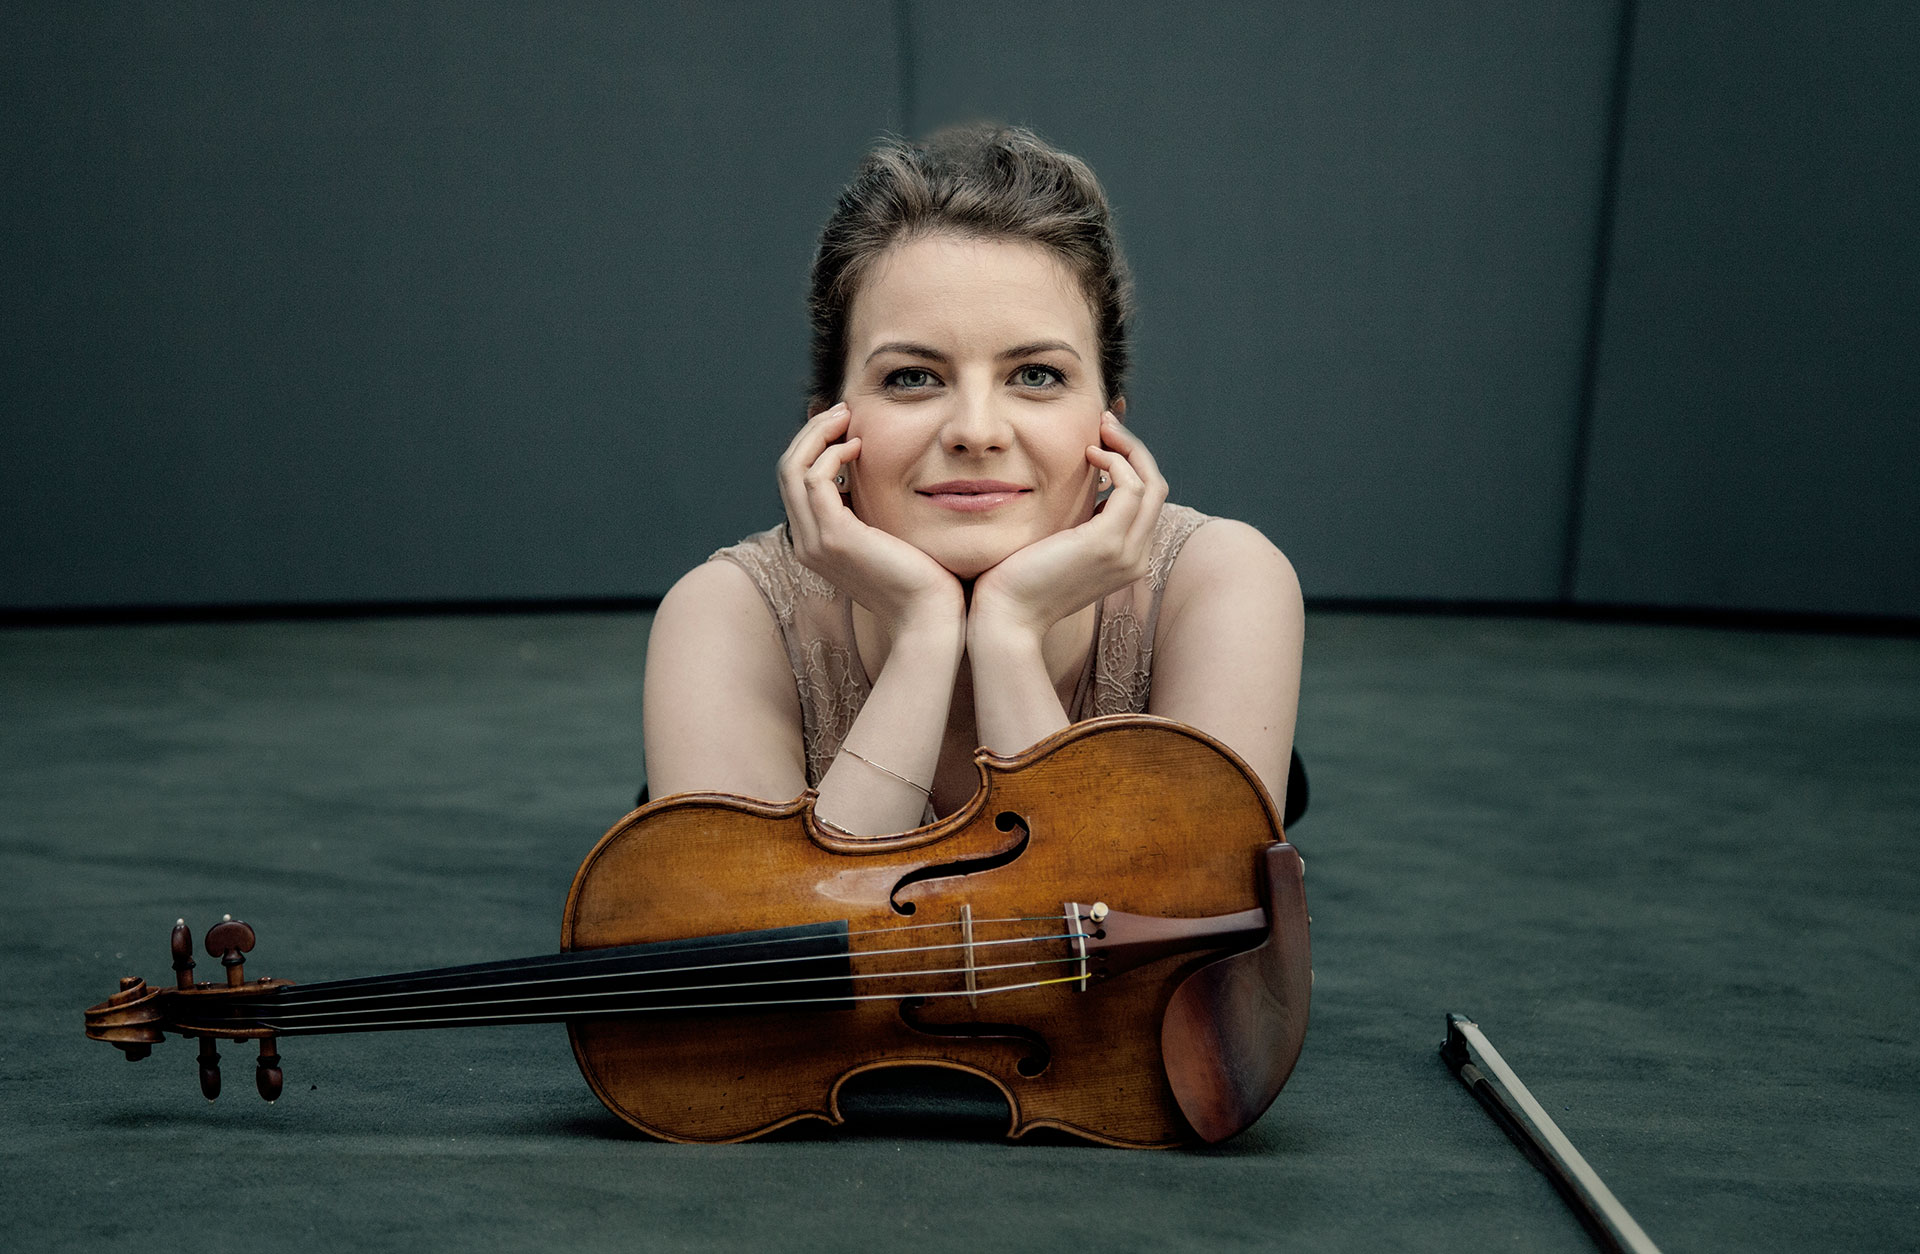 Violinisten Veronika Eberle